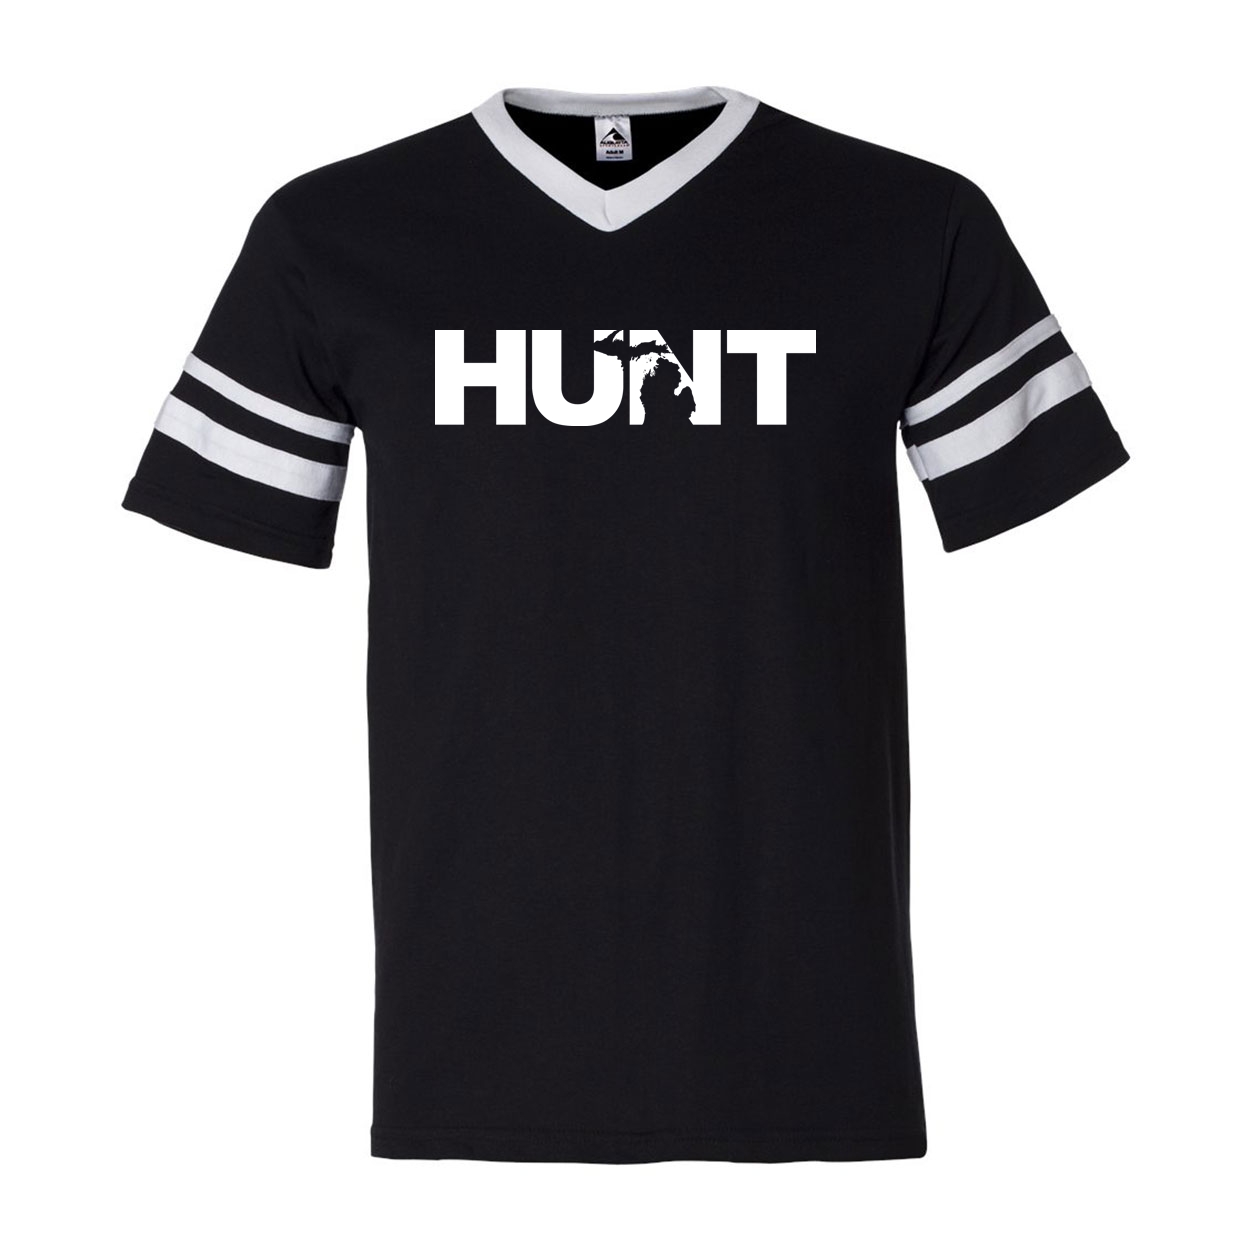 Hunt Michigan Classic Premium Striped Jersey T-Shirt Black/White (White Logo)